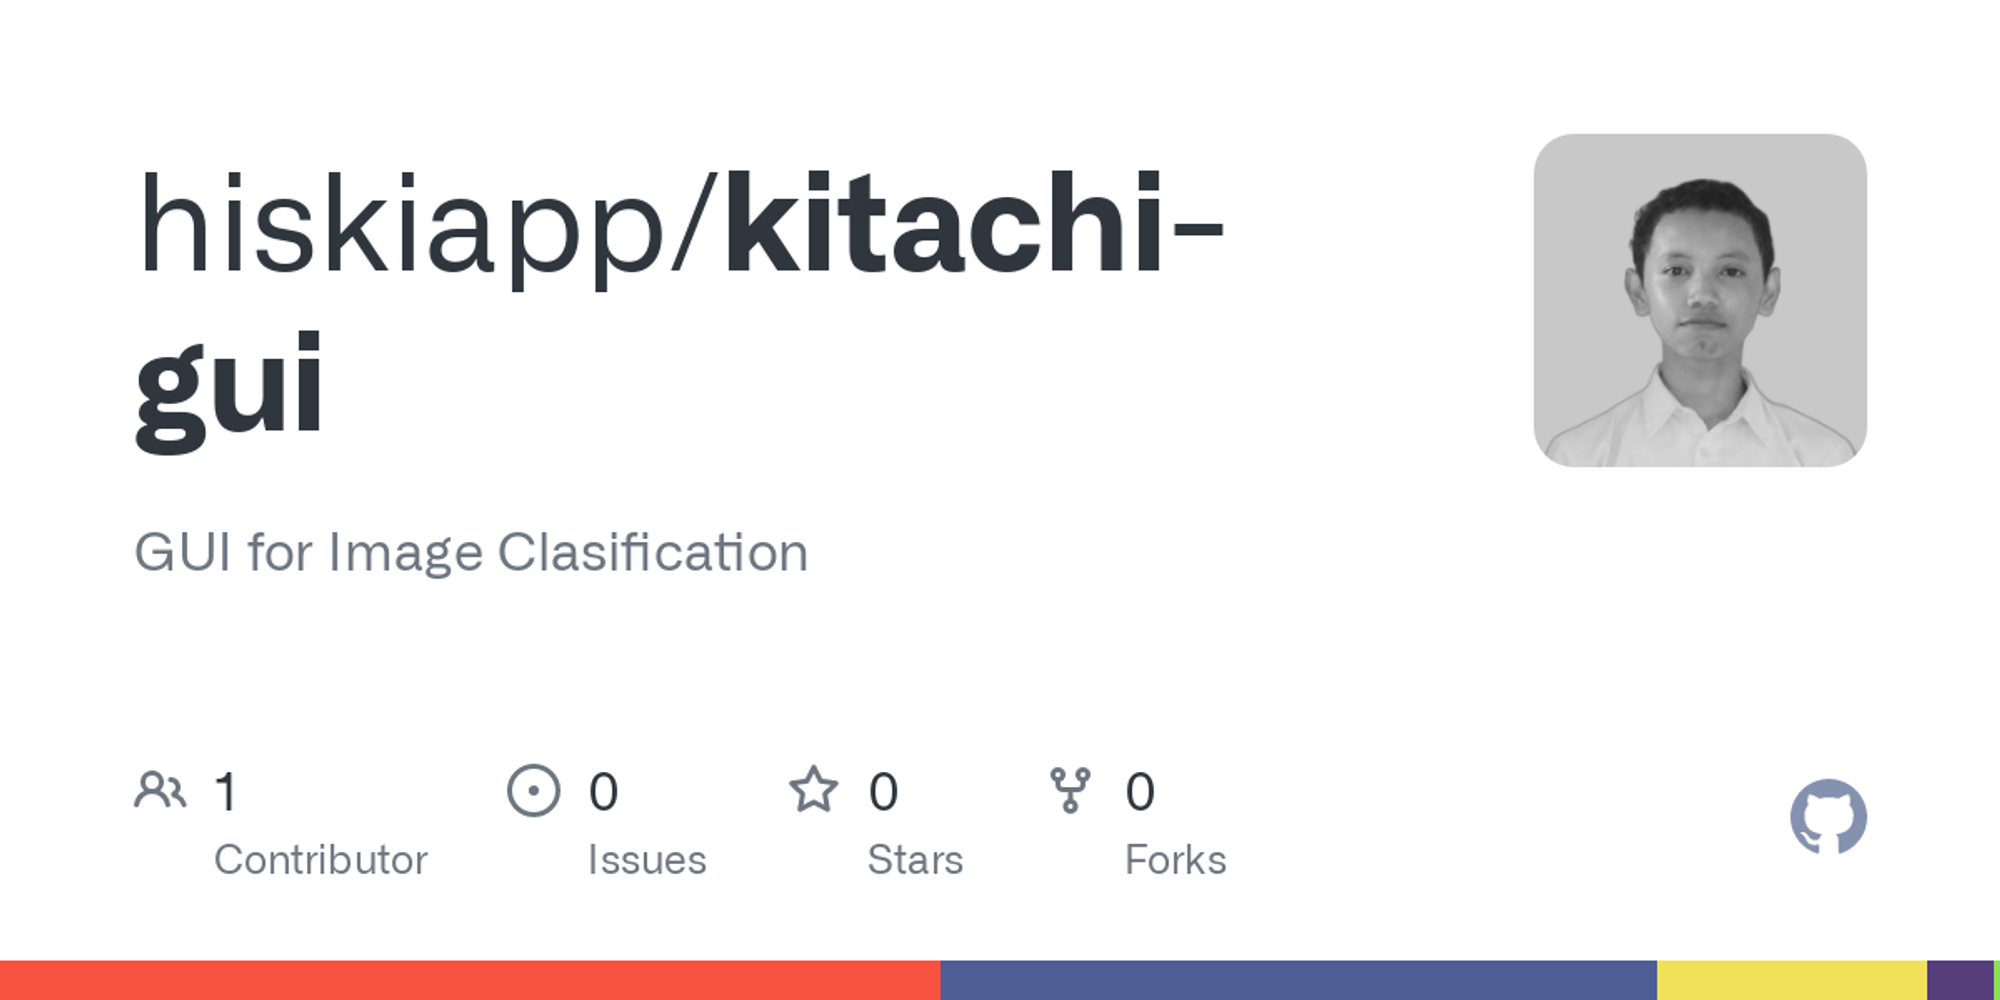 GitHub - hiskiapp/kitachi-gui: GUI for Image Clasification